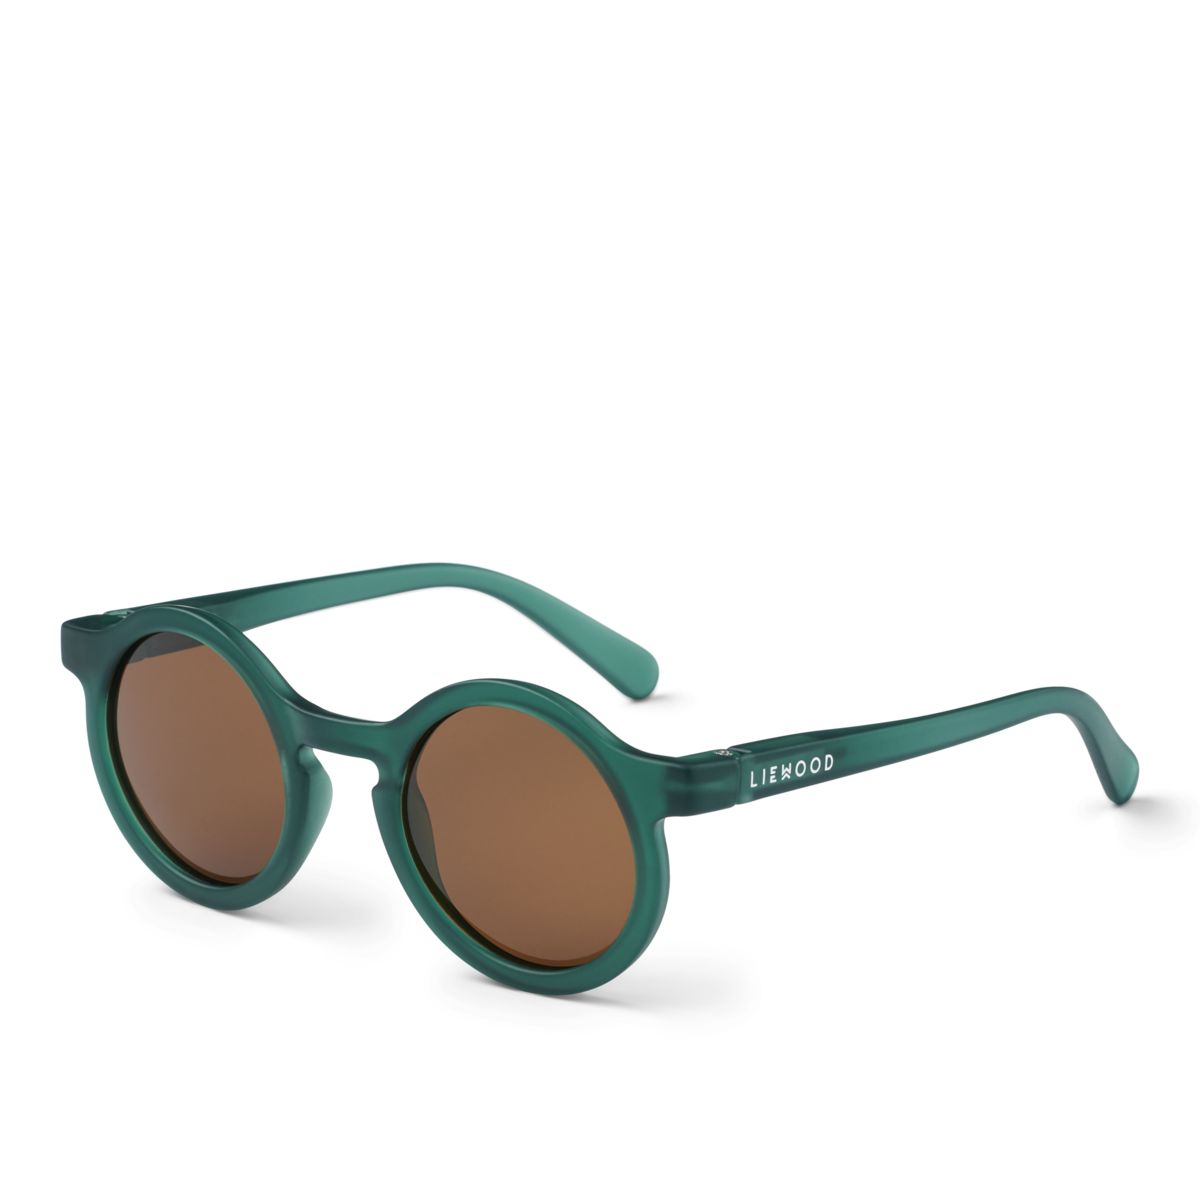 Darla sunglasses 1-3 years - Garden Green